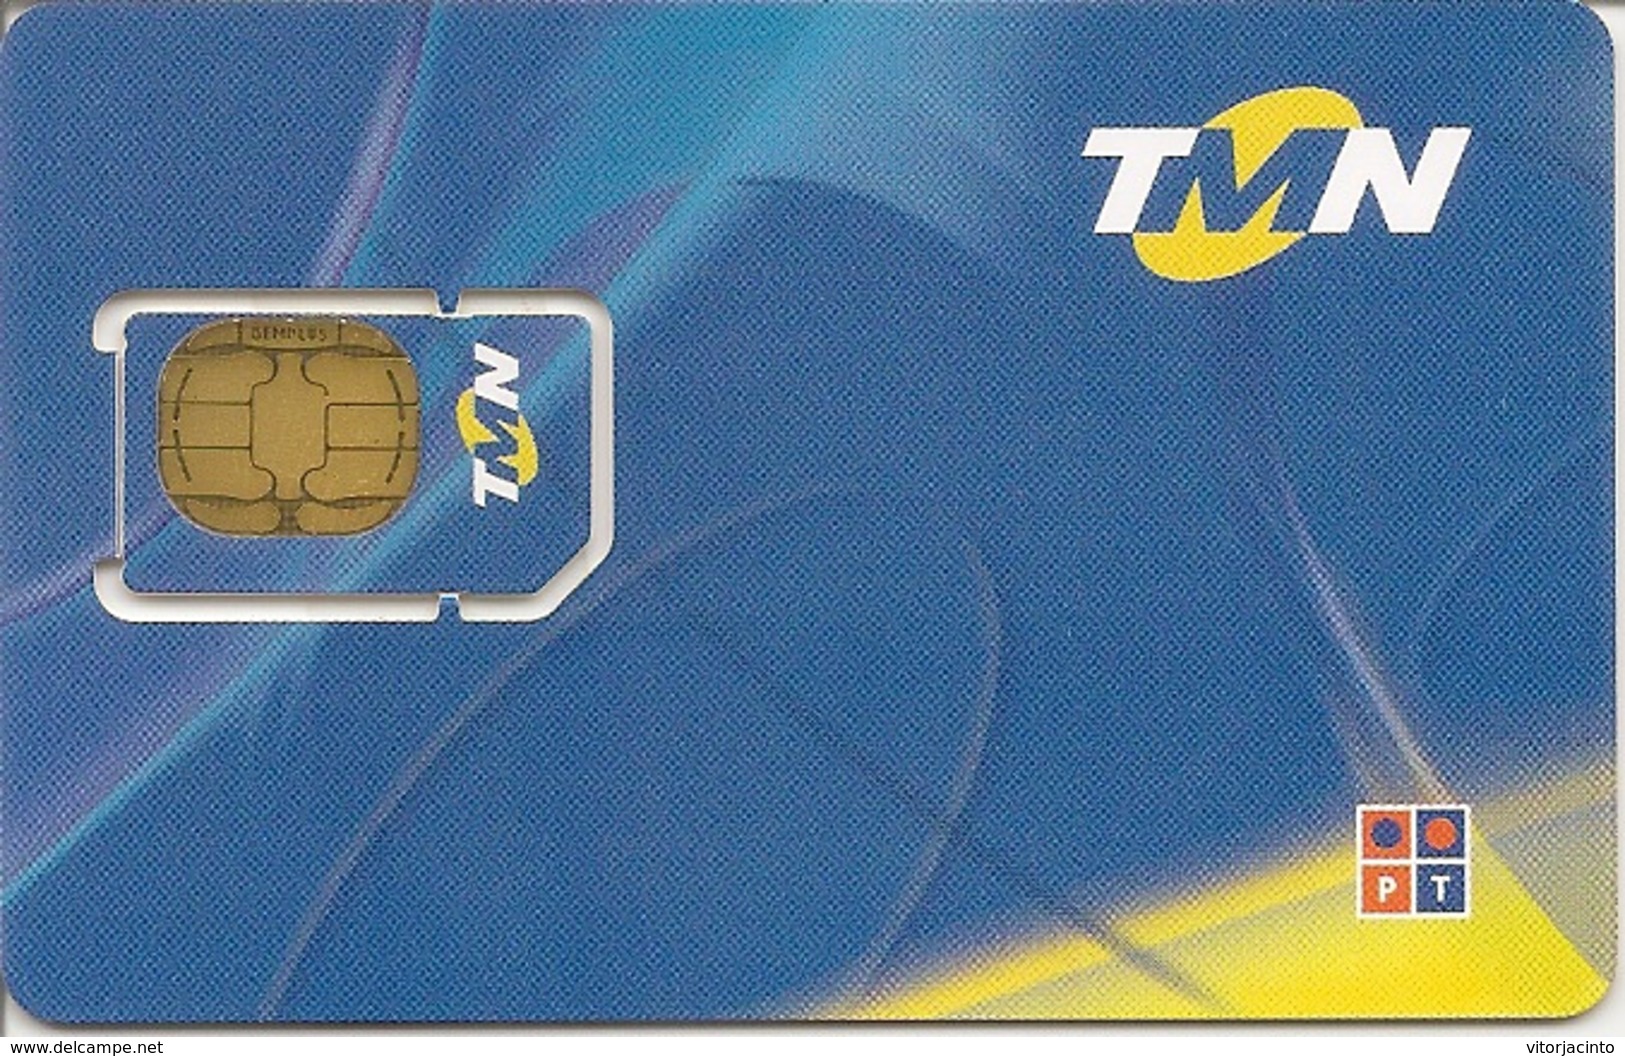 Mobile Phonecard (Gemplus)- TMN PT - Portugal - Portugal